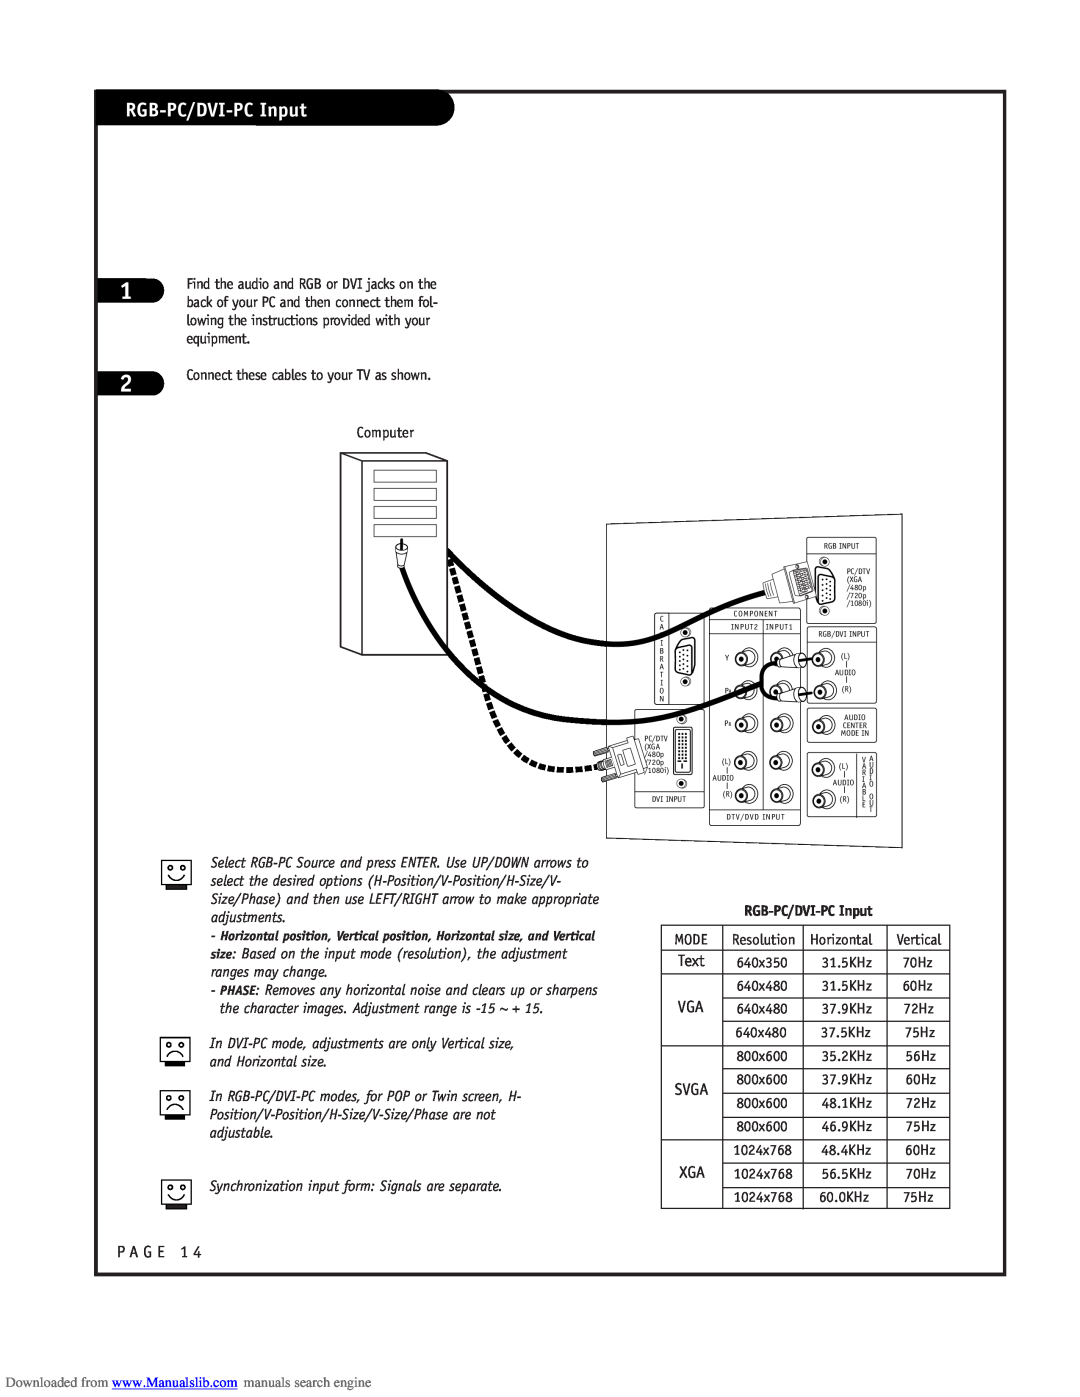 LG Electronics RU-52SZ53D owner manual RGB-PC/DVI-PC Input, Synchronization input form Signals are separate 